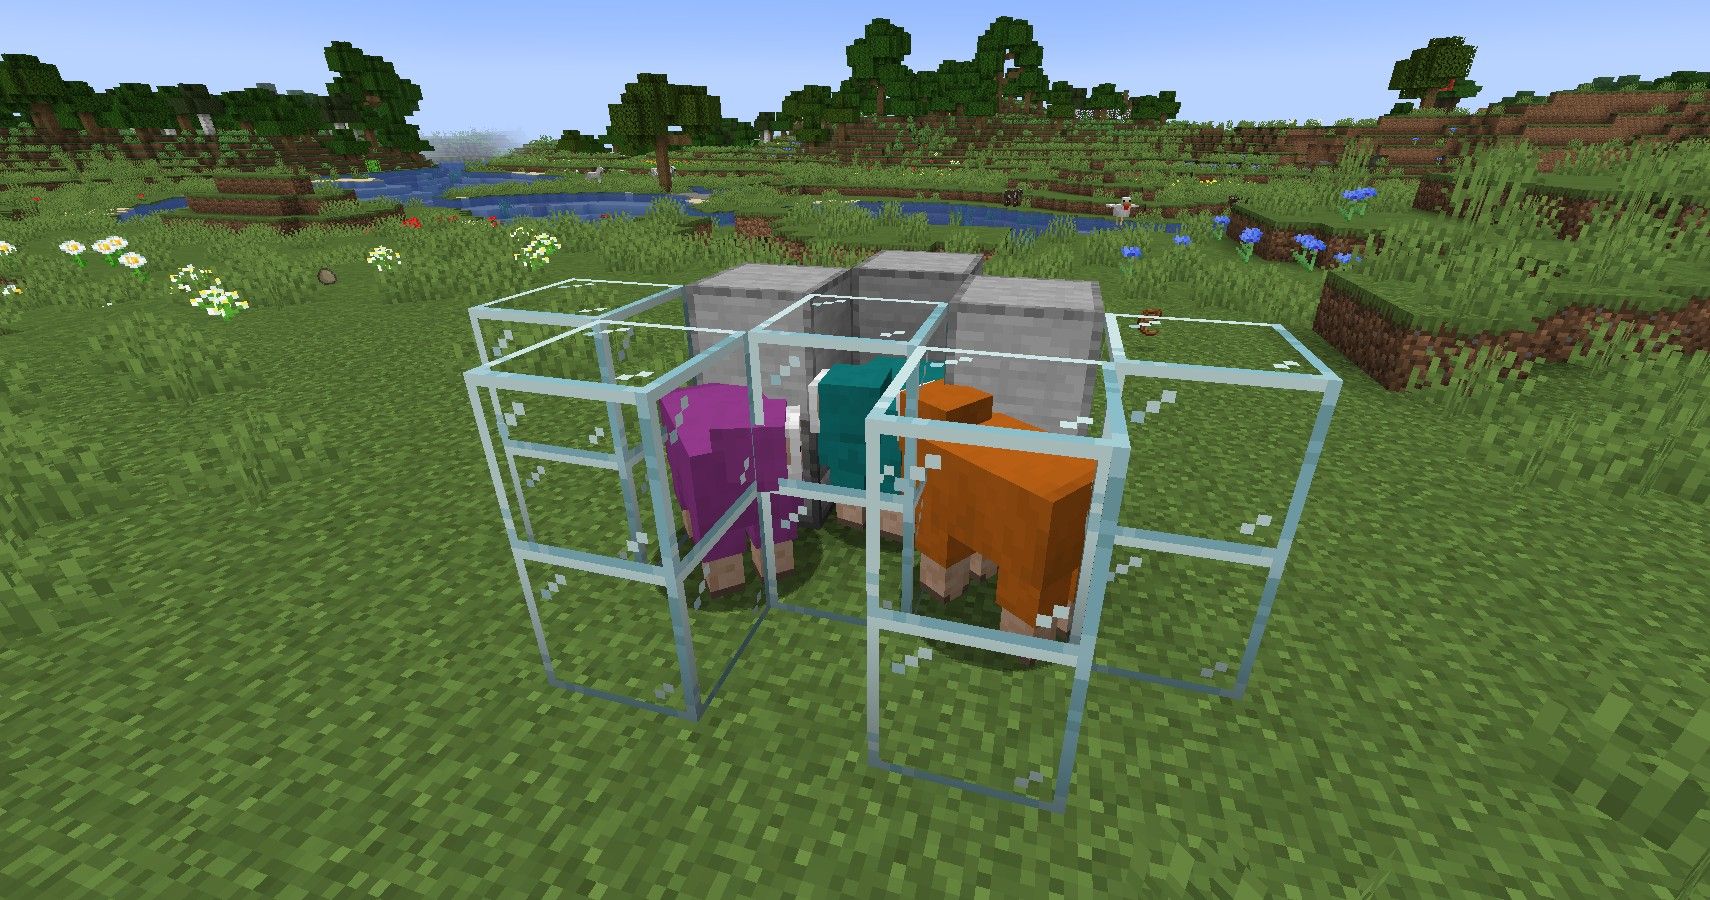 dyed sheep set in minecraft wool farm